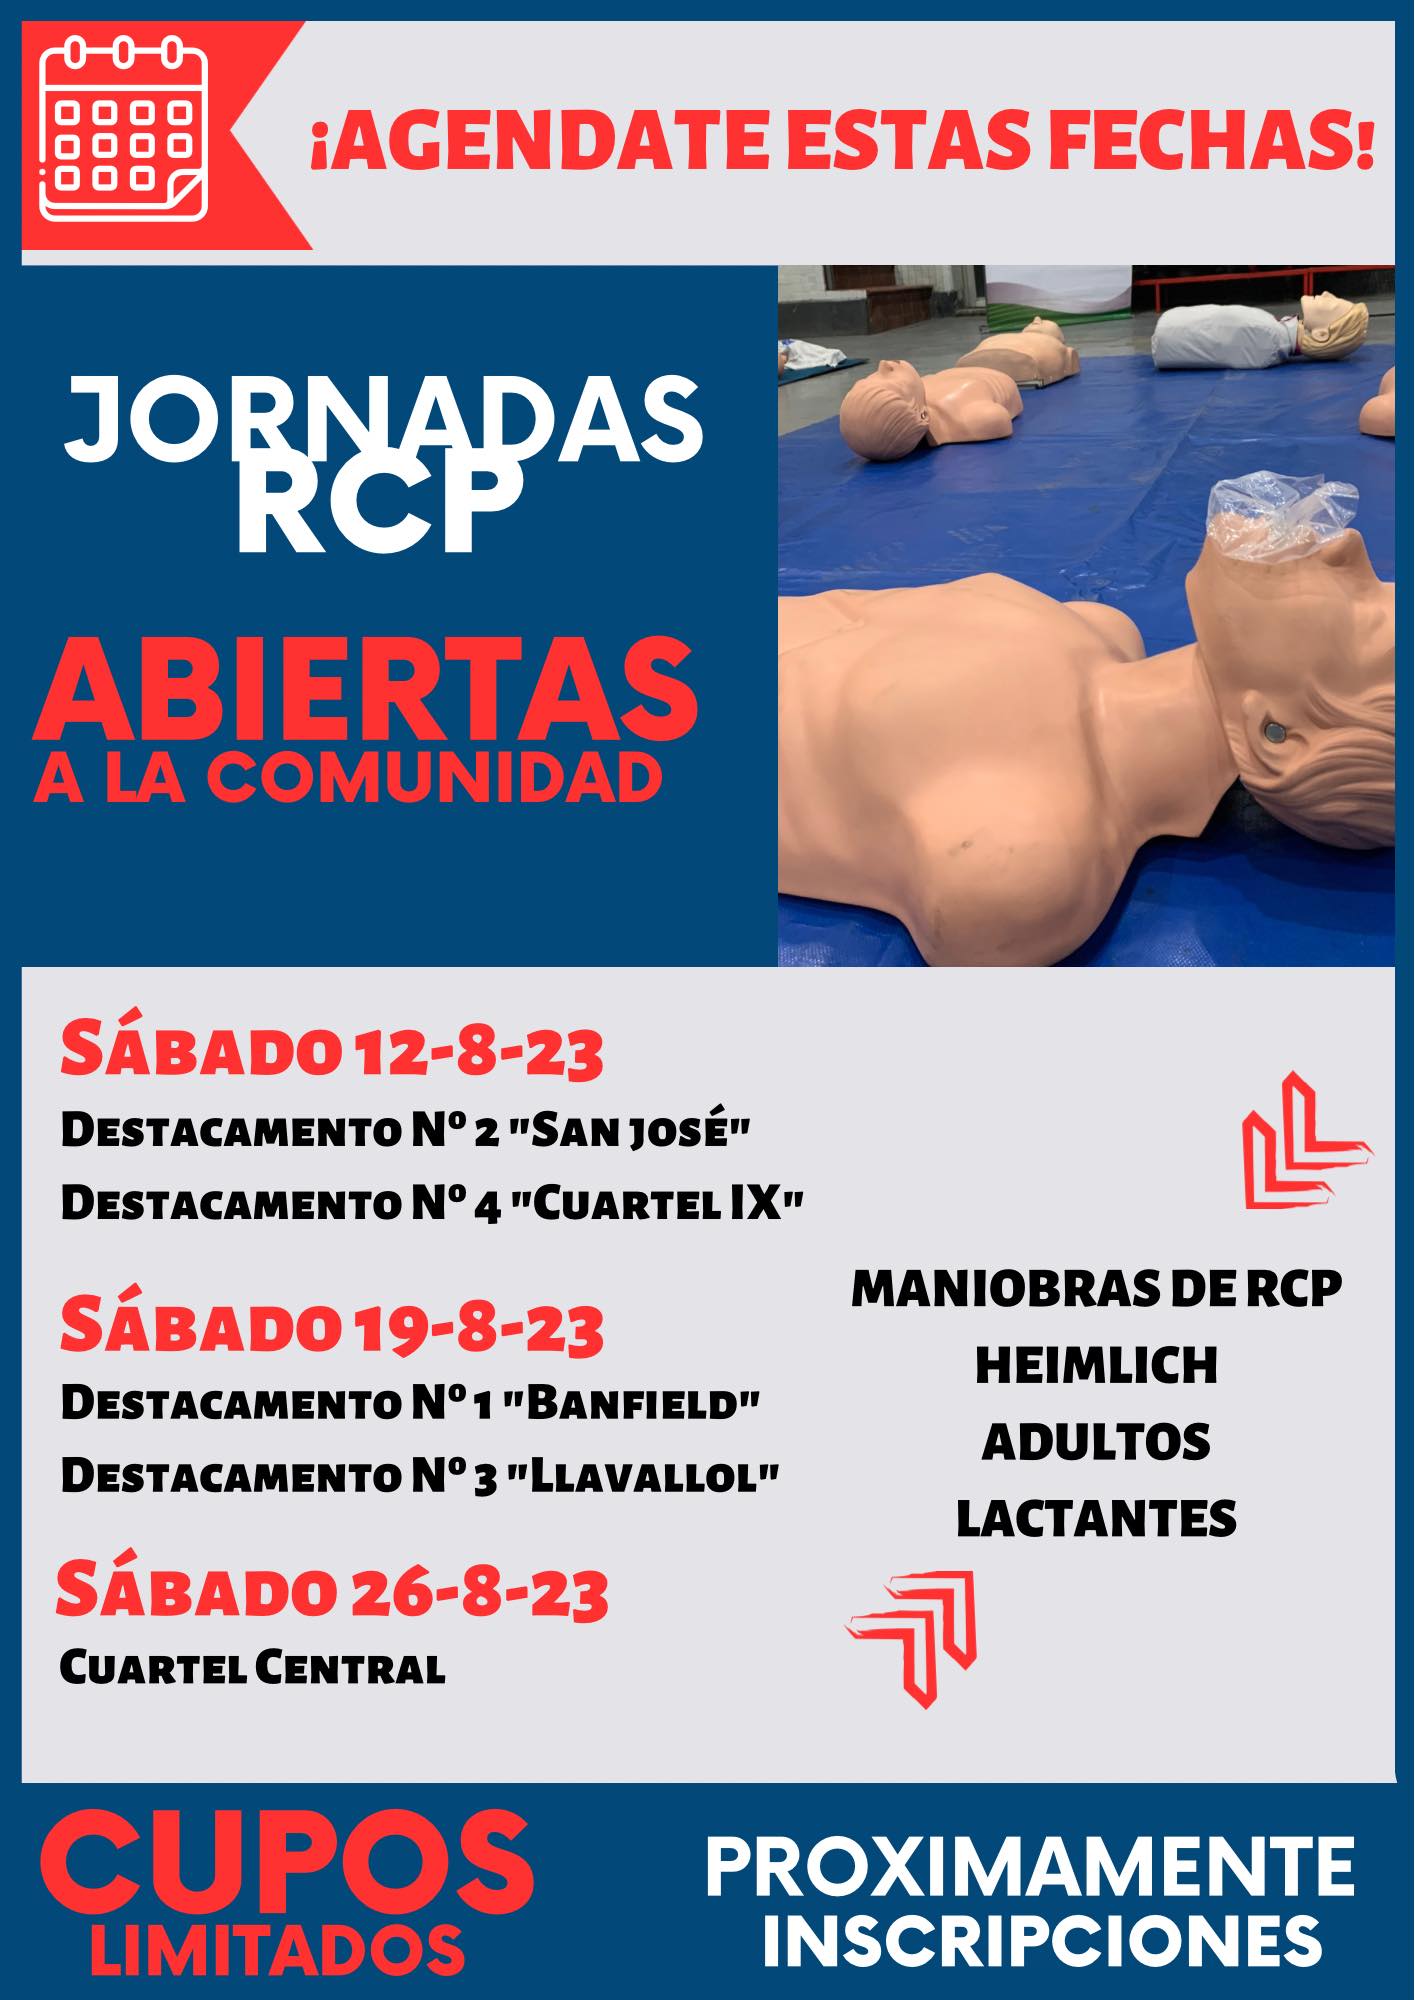 Cursos de Reanimación Cardiopulmonar en Bomberos de Lomas de Zamora